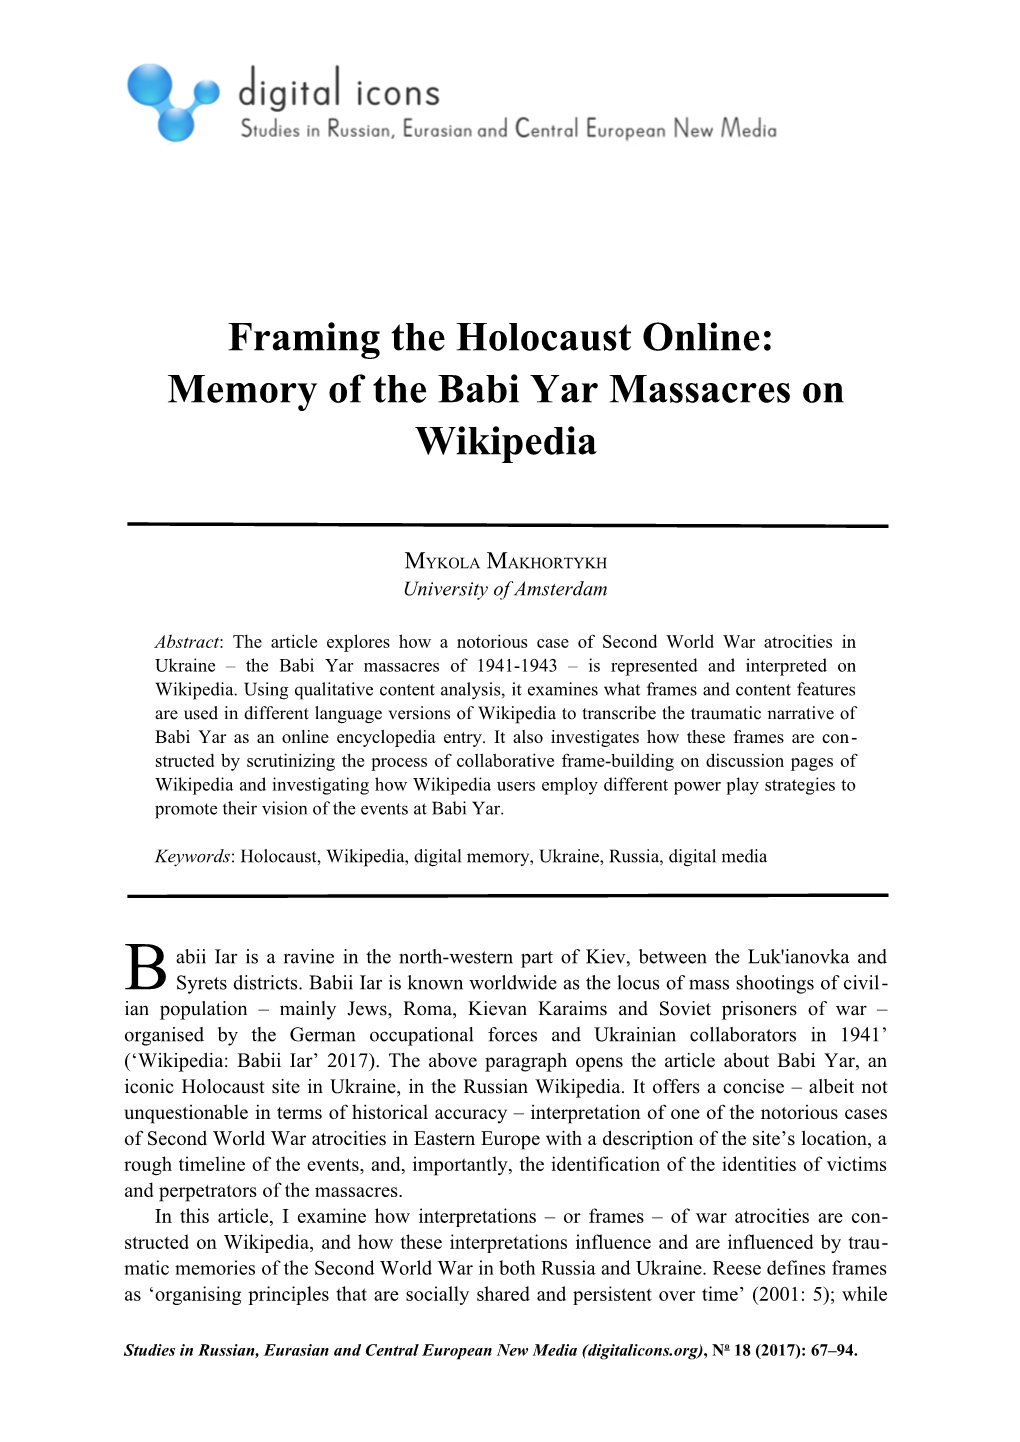 Framing the Holocaust Online: Memory of the Babi Yar Massacres on Wikipedia